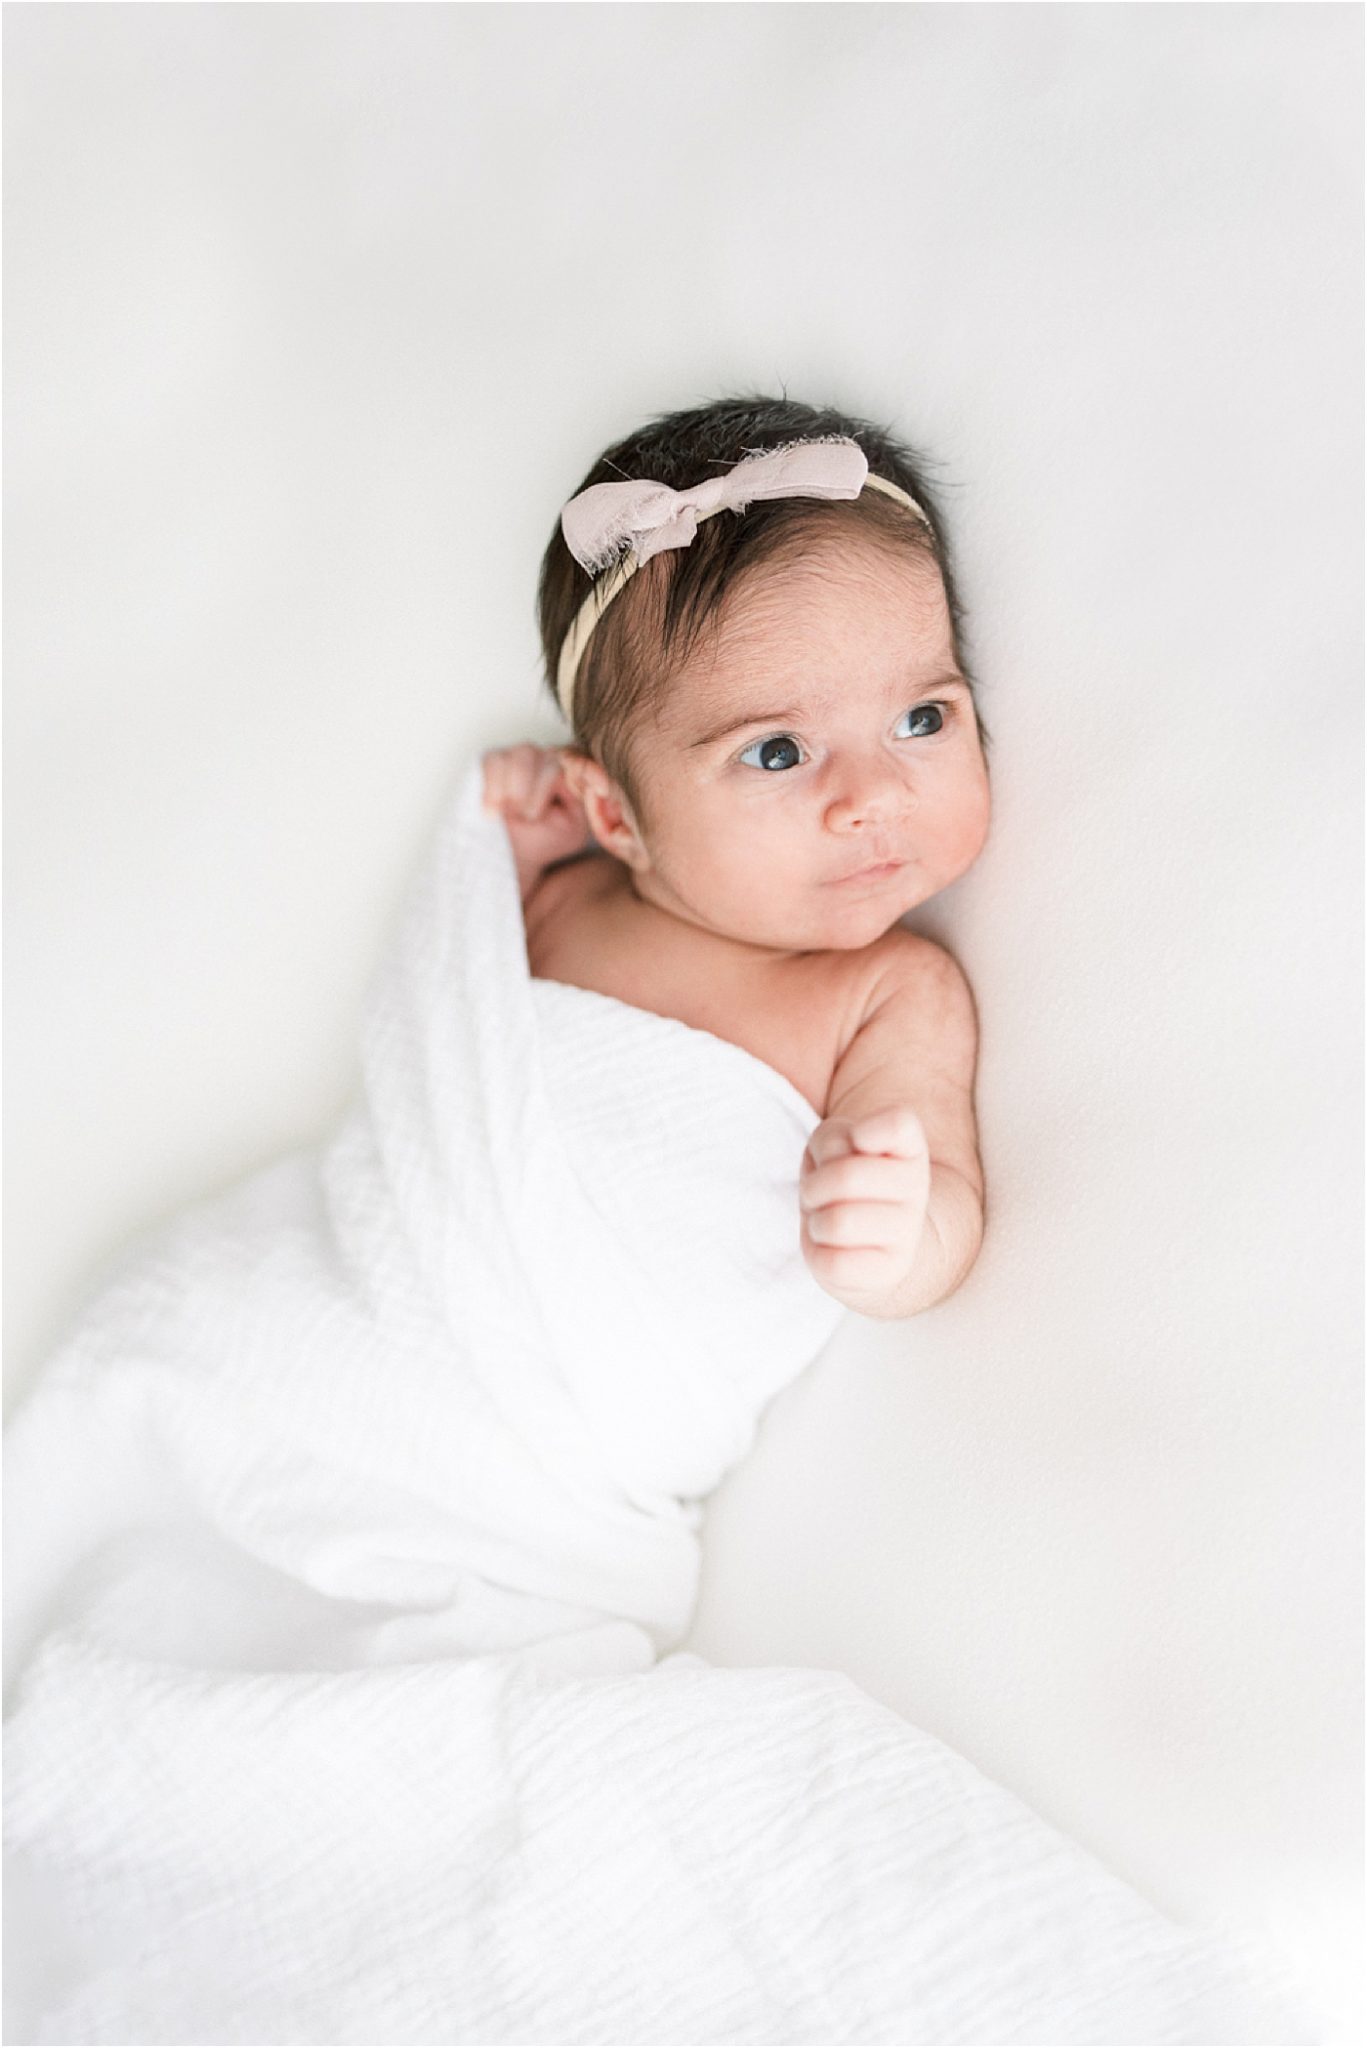 Studio newborn photos for baby girl. Photo by Lindsay Konopa Photography.